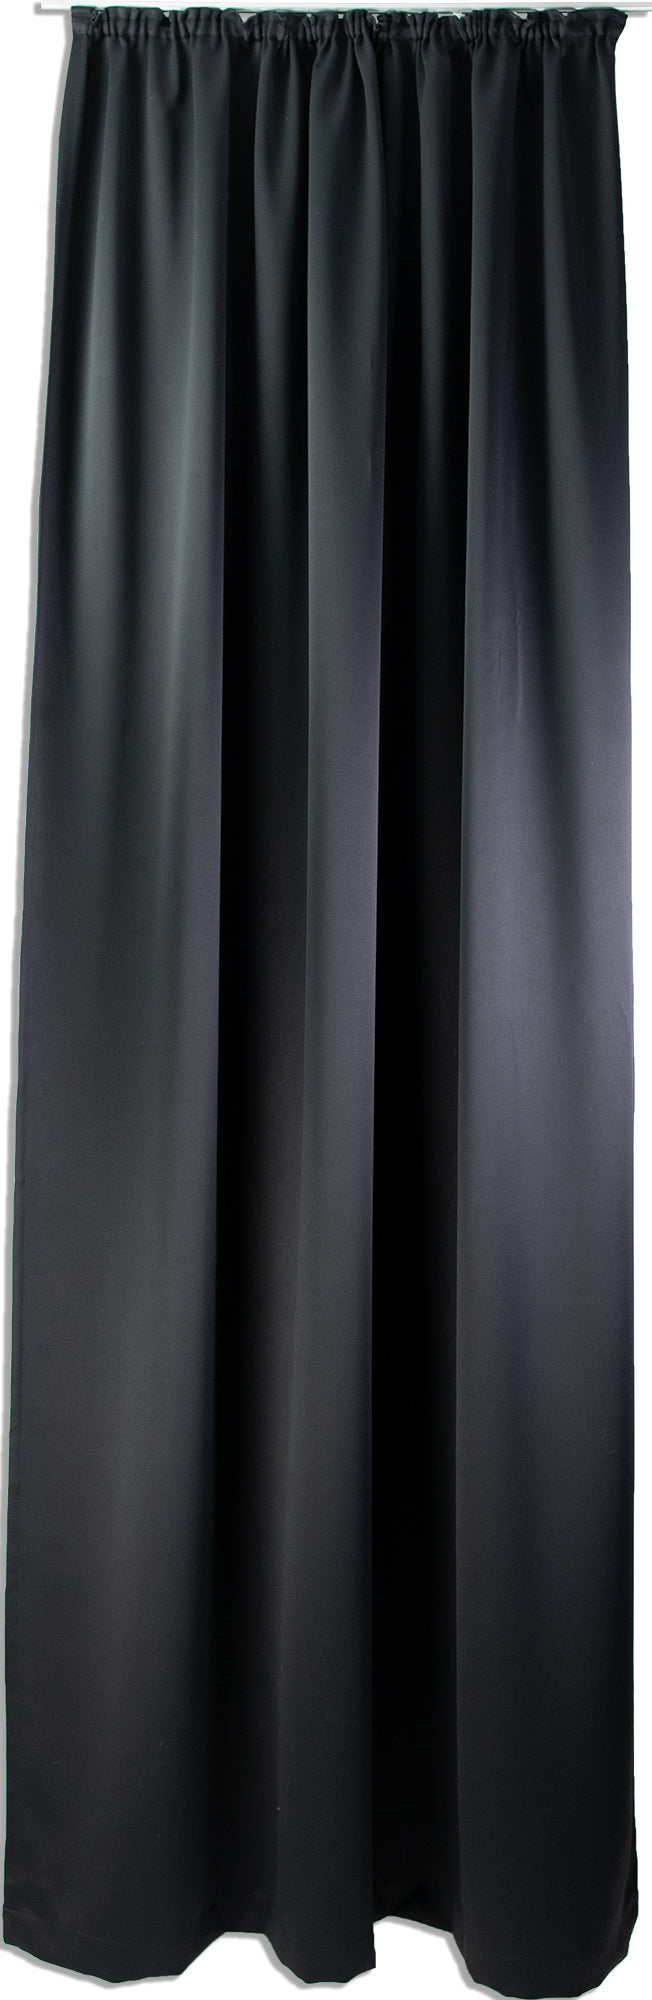 Blackout curtain black Dana